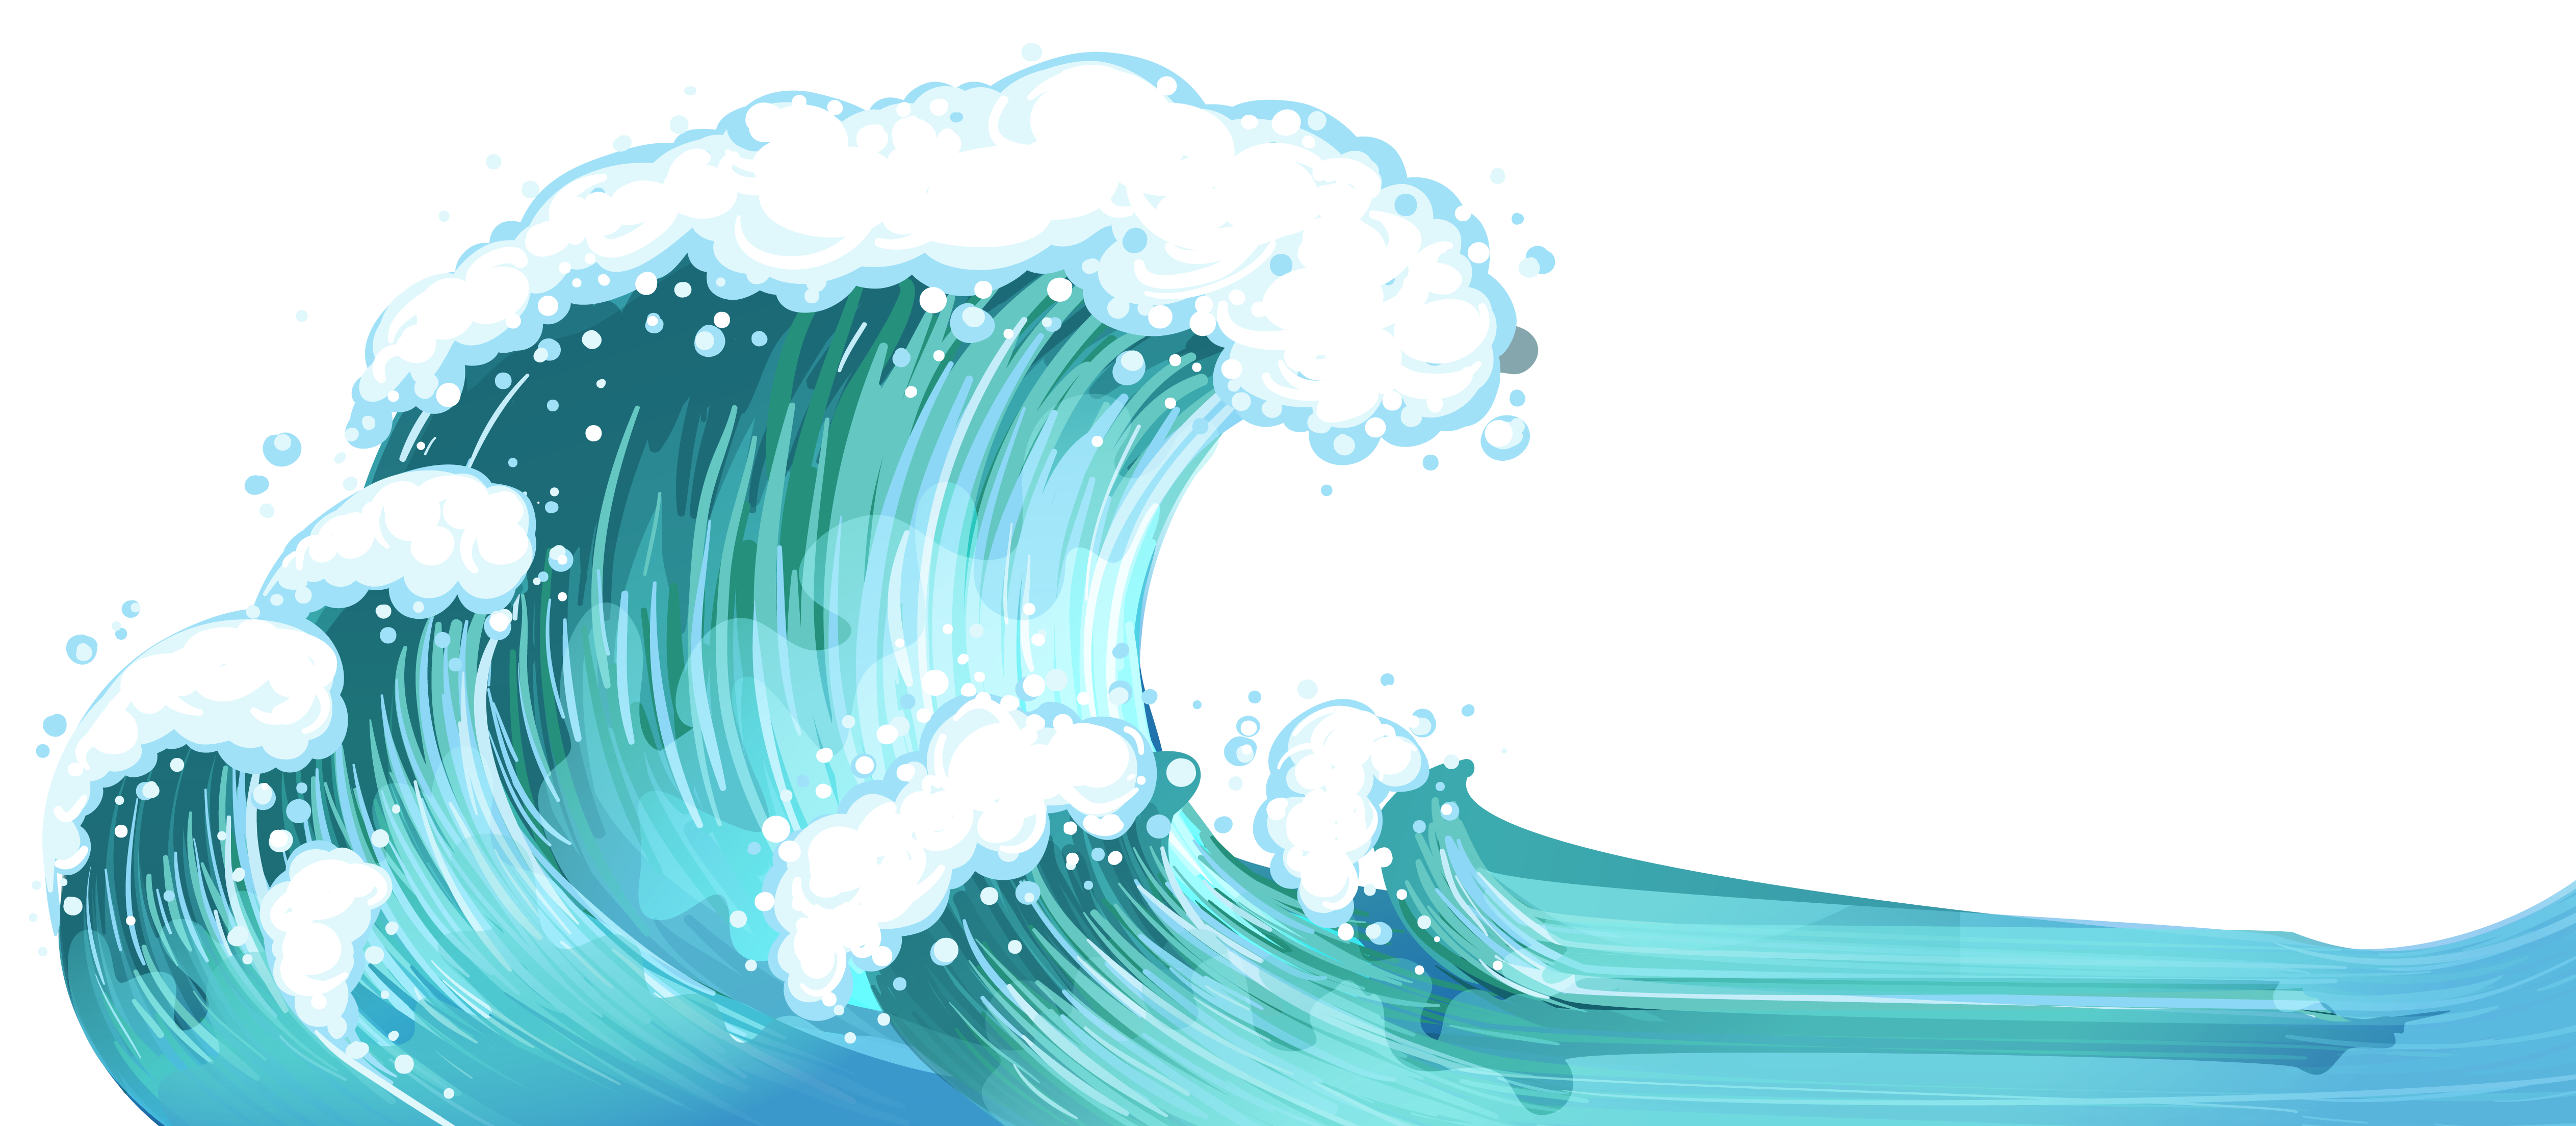 Waves ocean water clipart - Clipartix
 Ocean Water Waves Cartoon